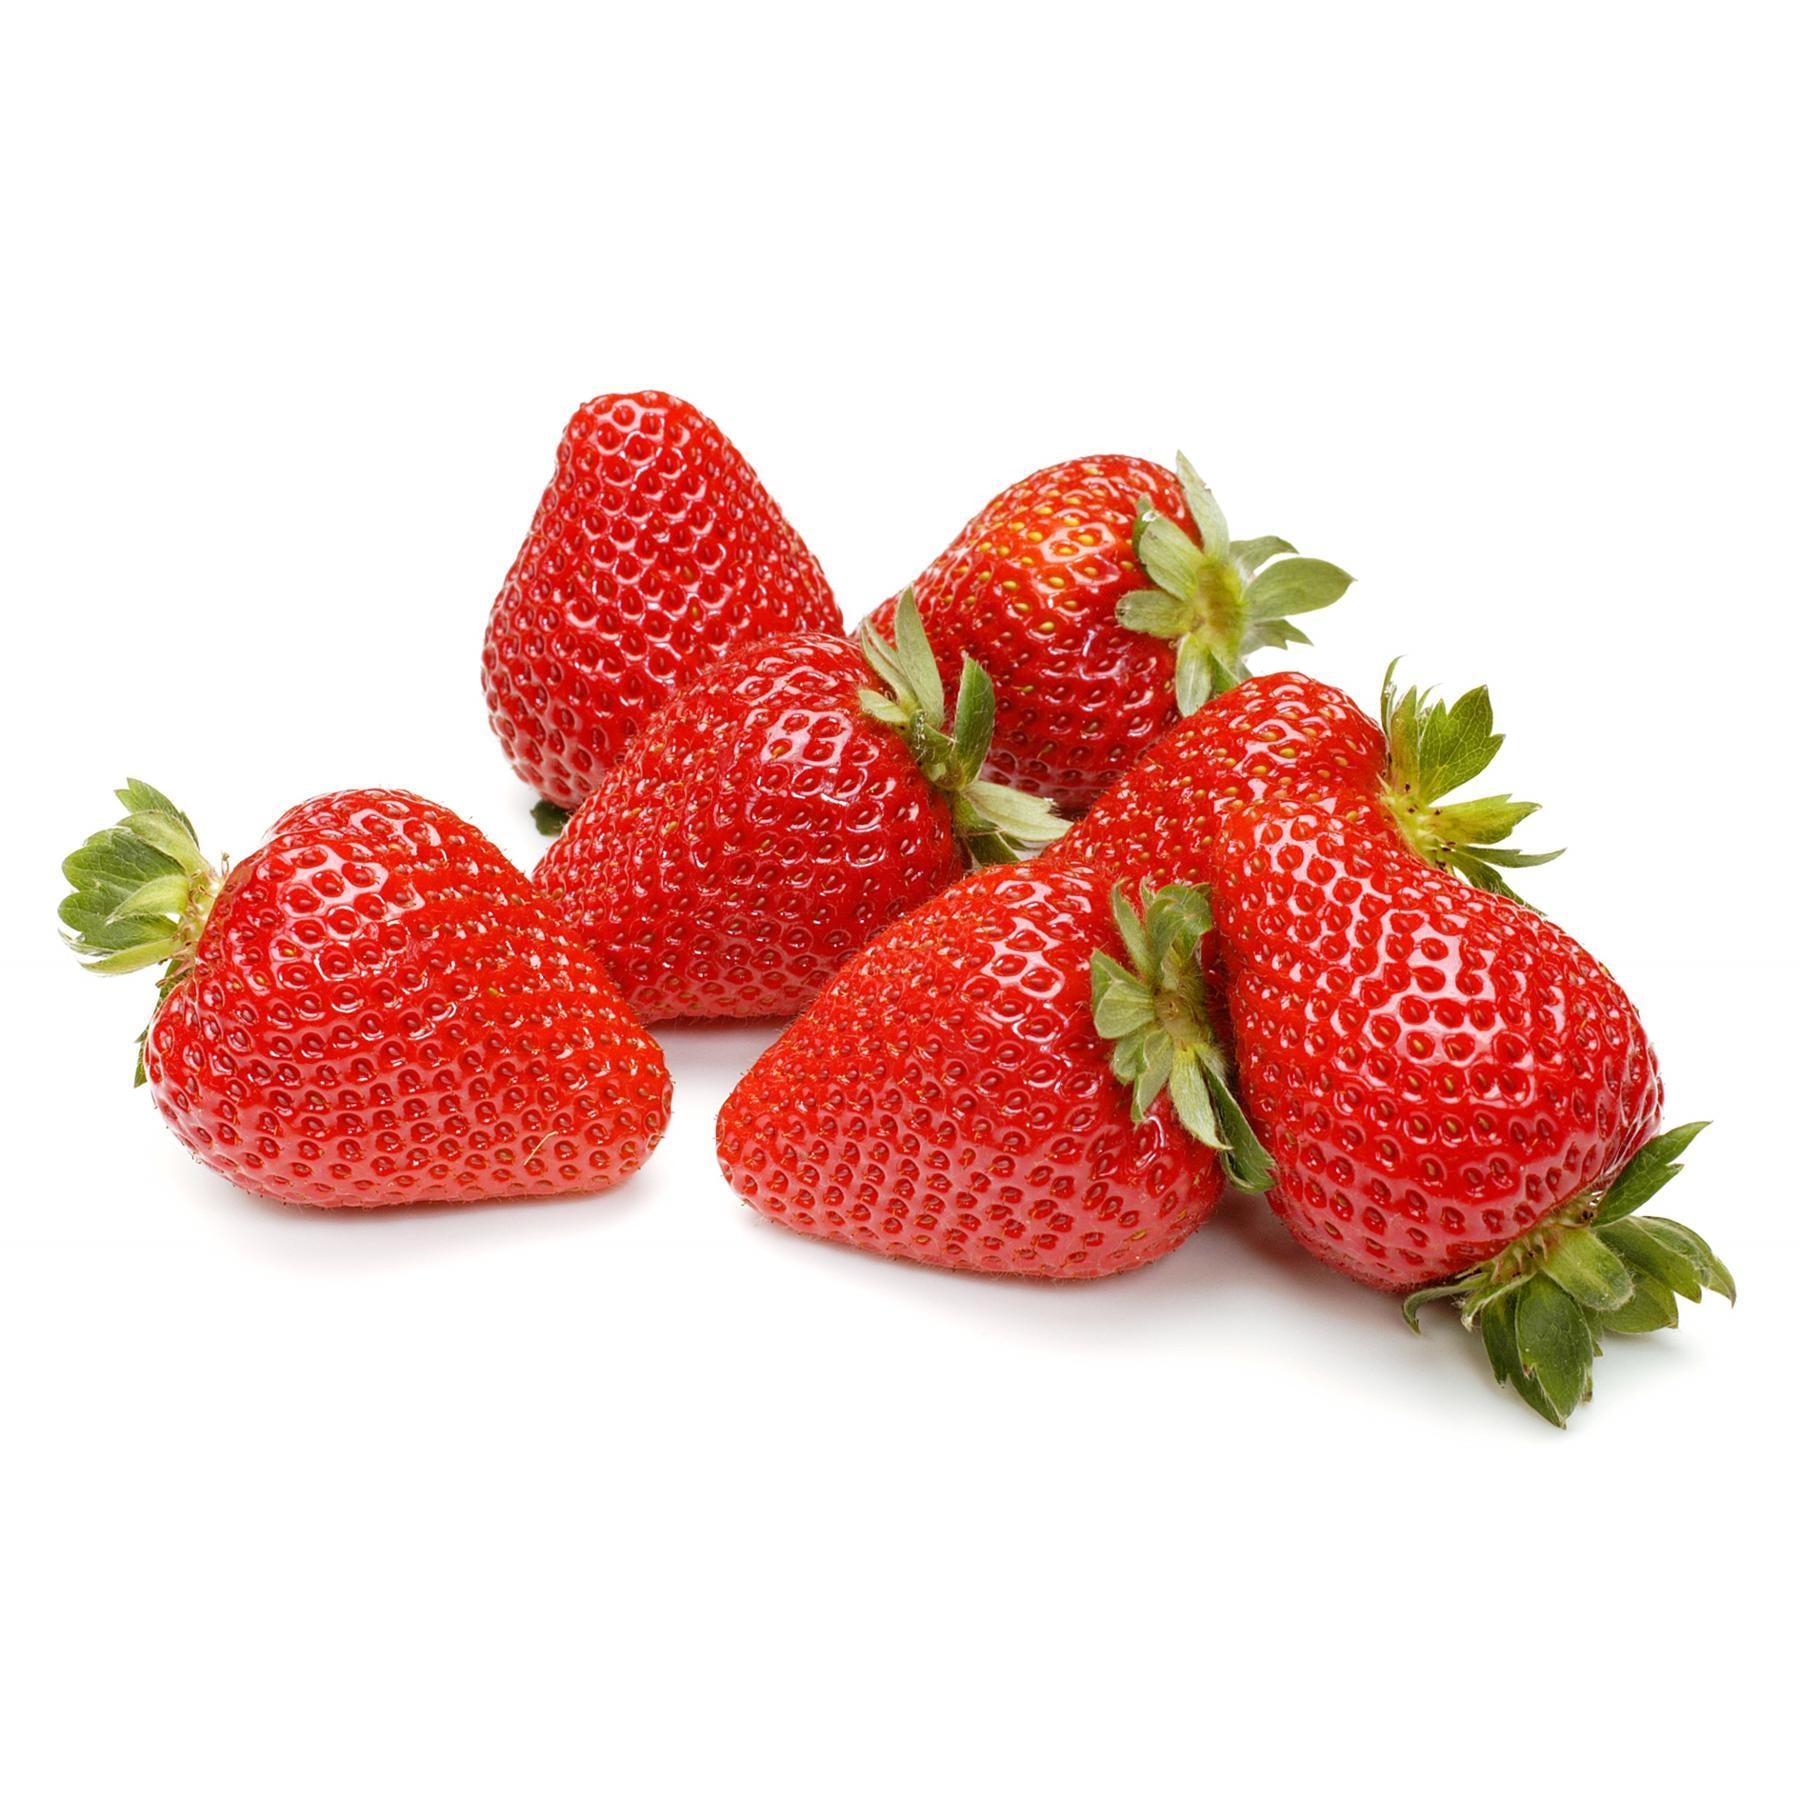 Sterilgarda Low-fat Strawberry Yogurt 250 g